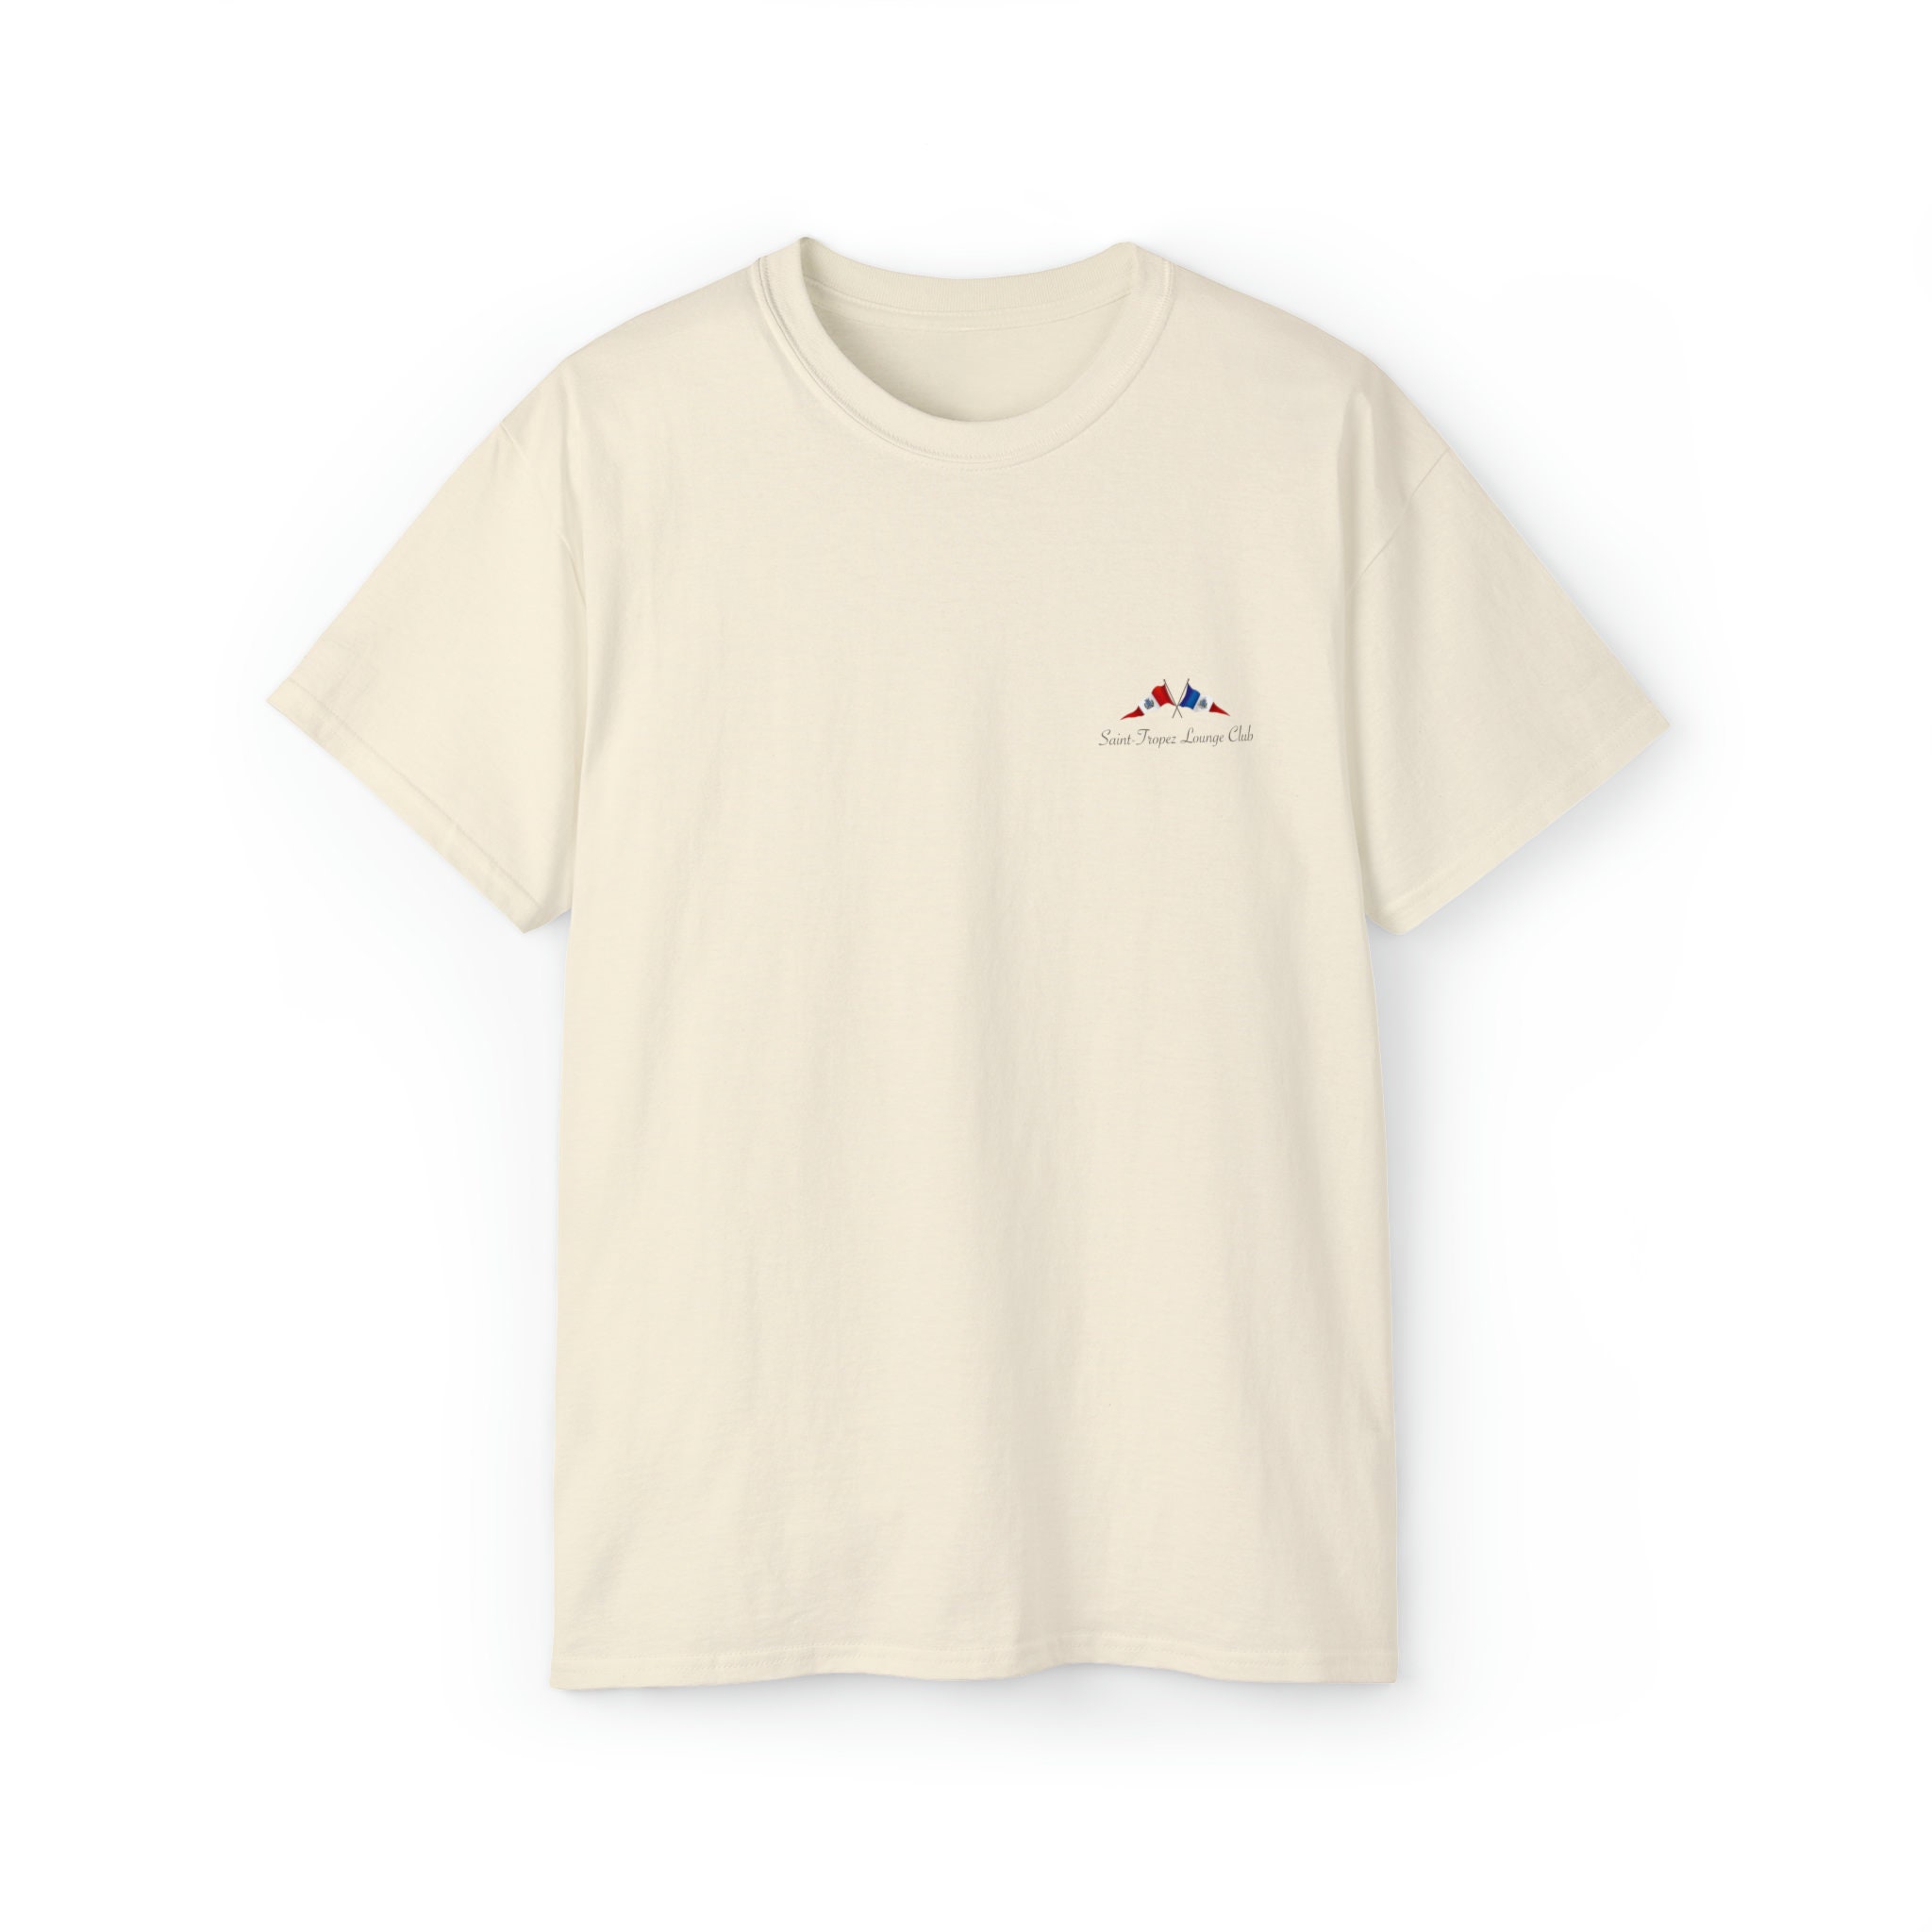 Saint Tropez T Shirt - Etsy